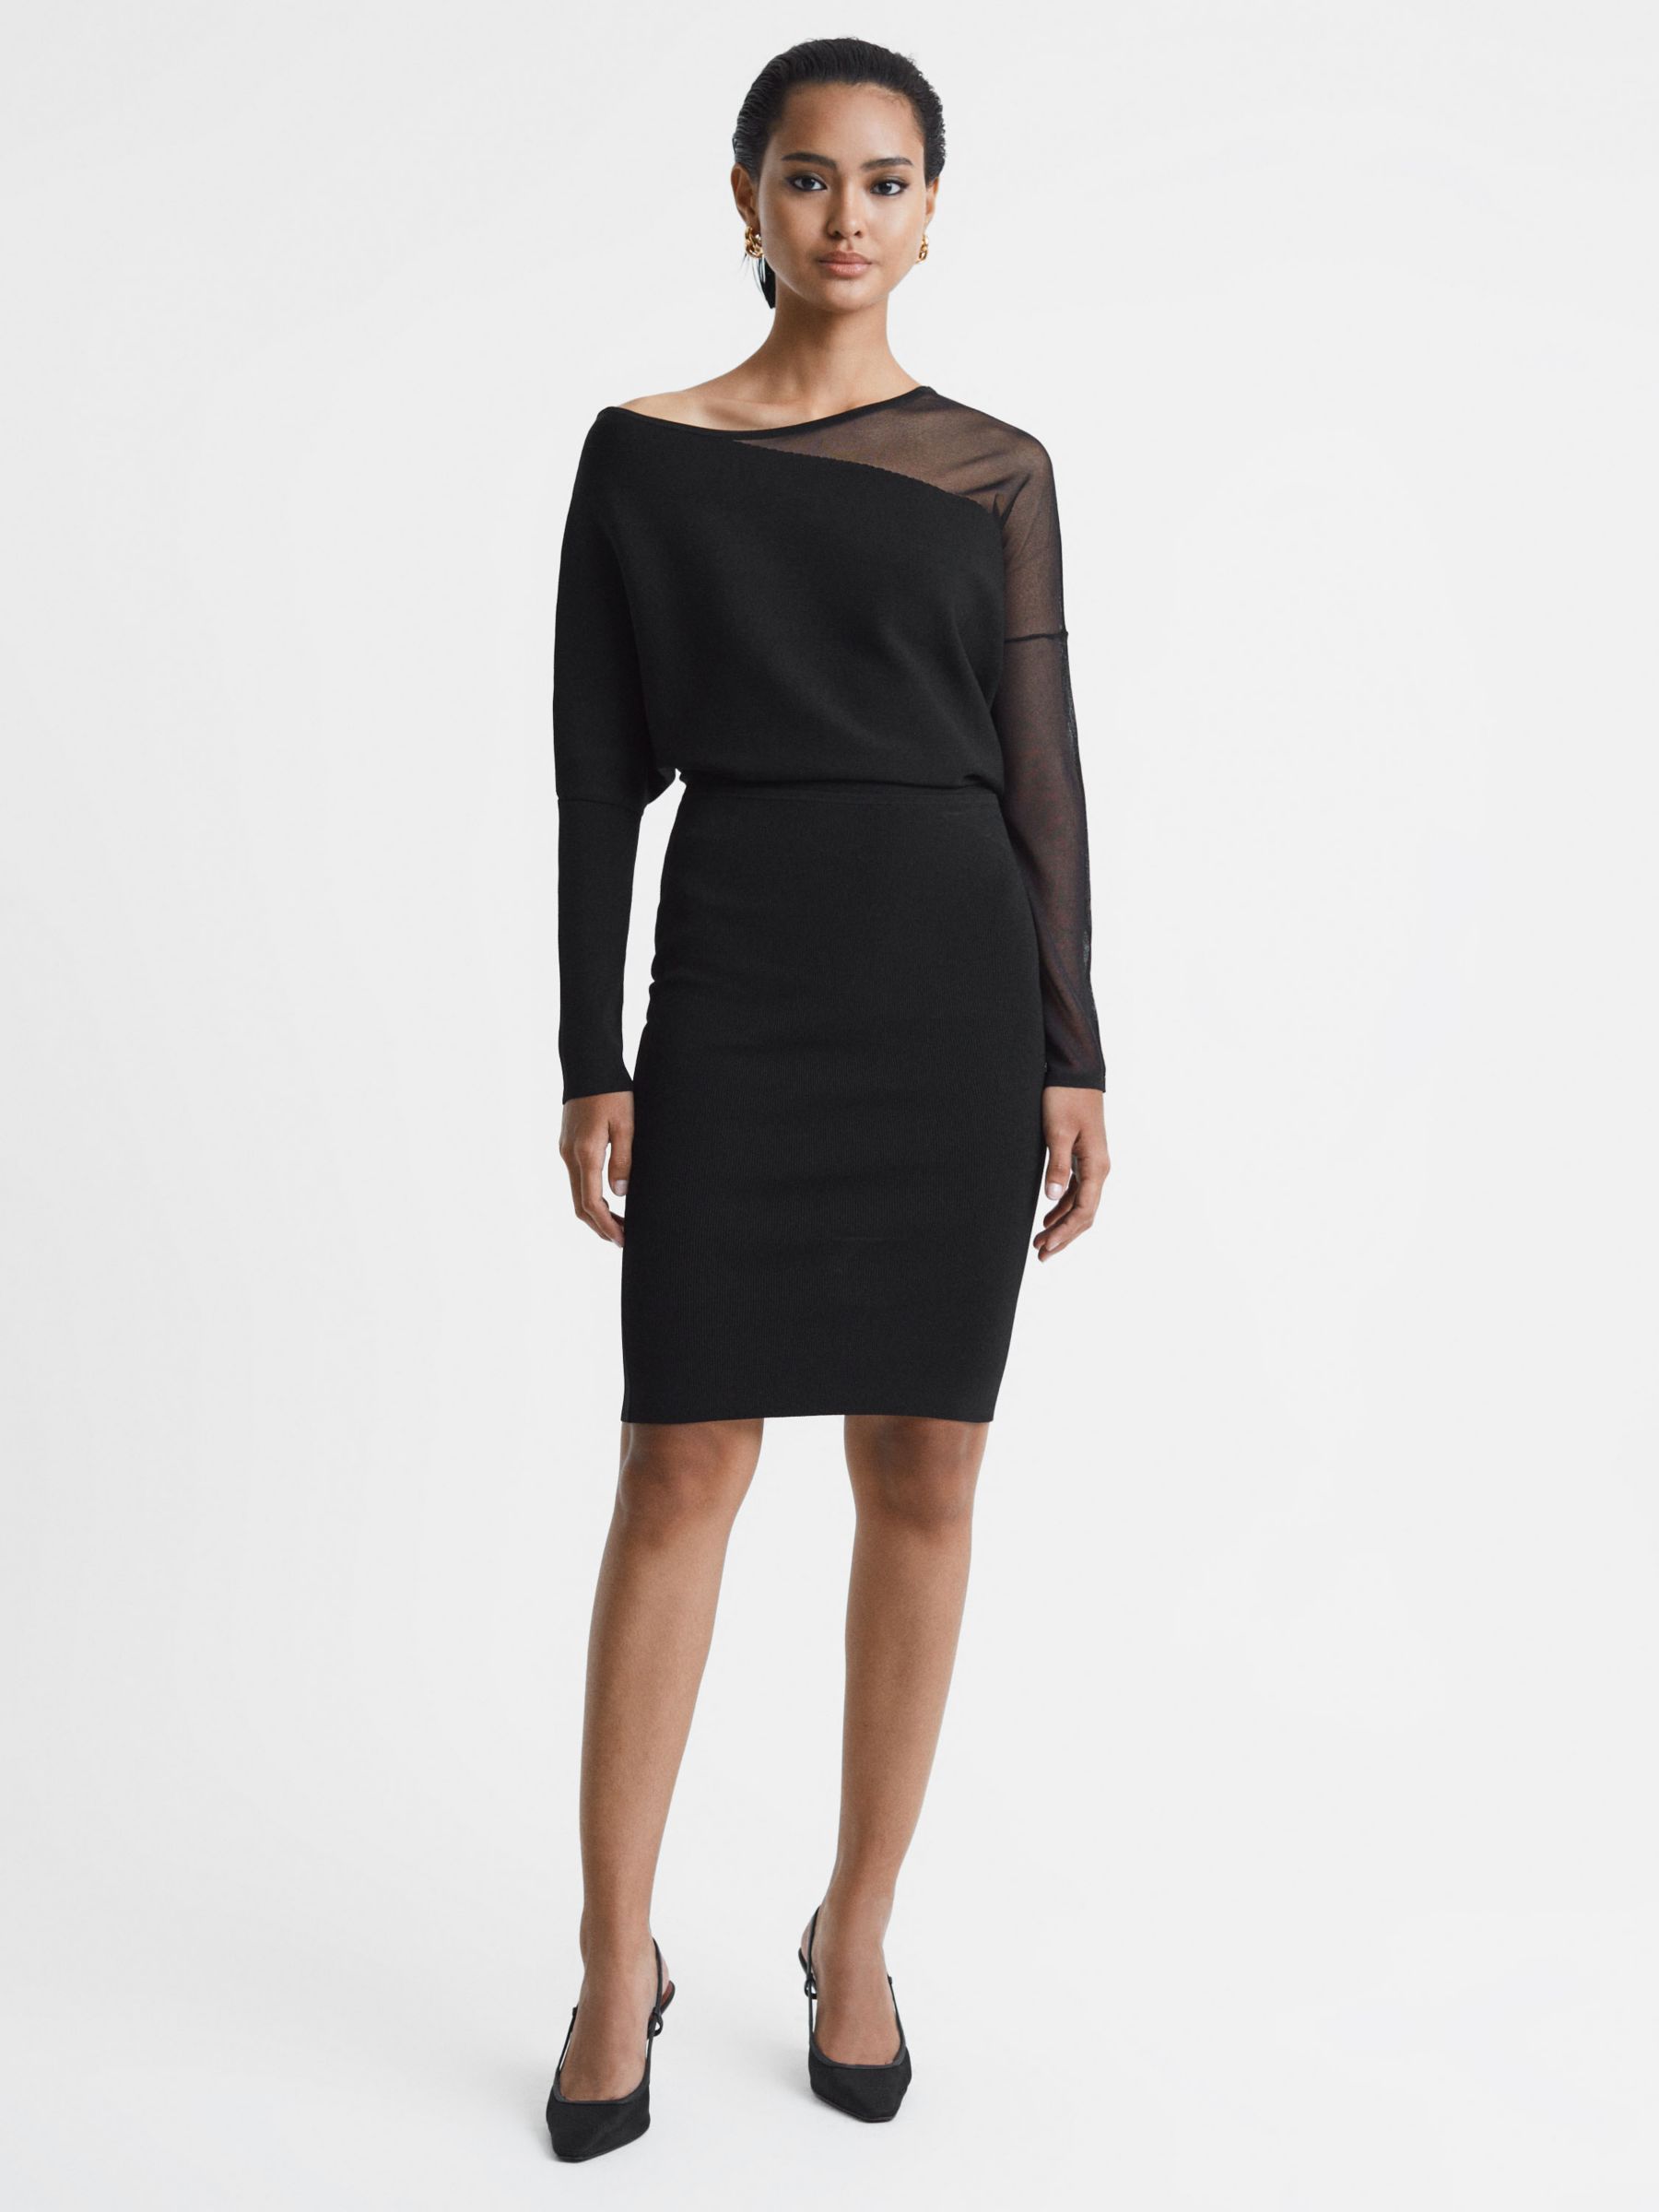 Buy Reiss Deanna Bodycon Knitted Sheer Sleeve Dress, Black Online at johnlewis.com